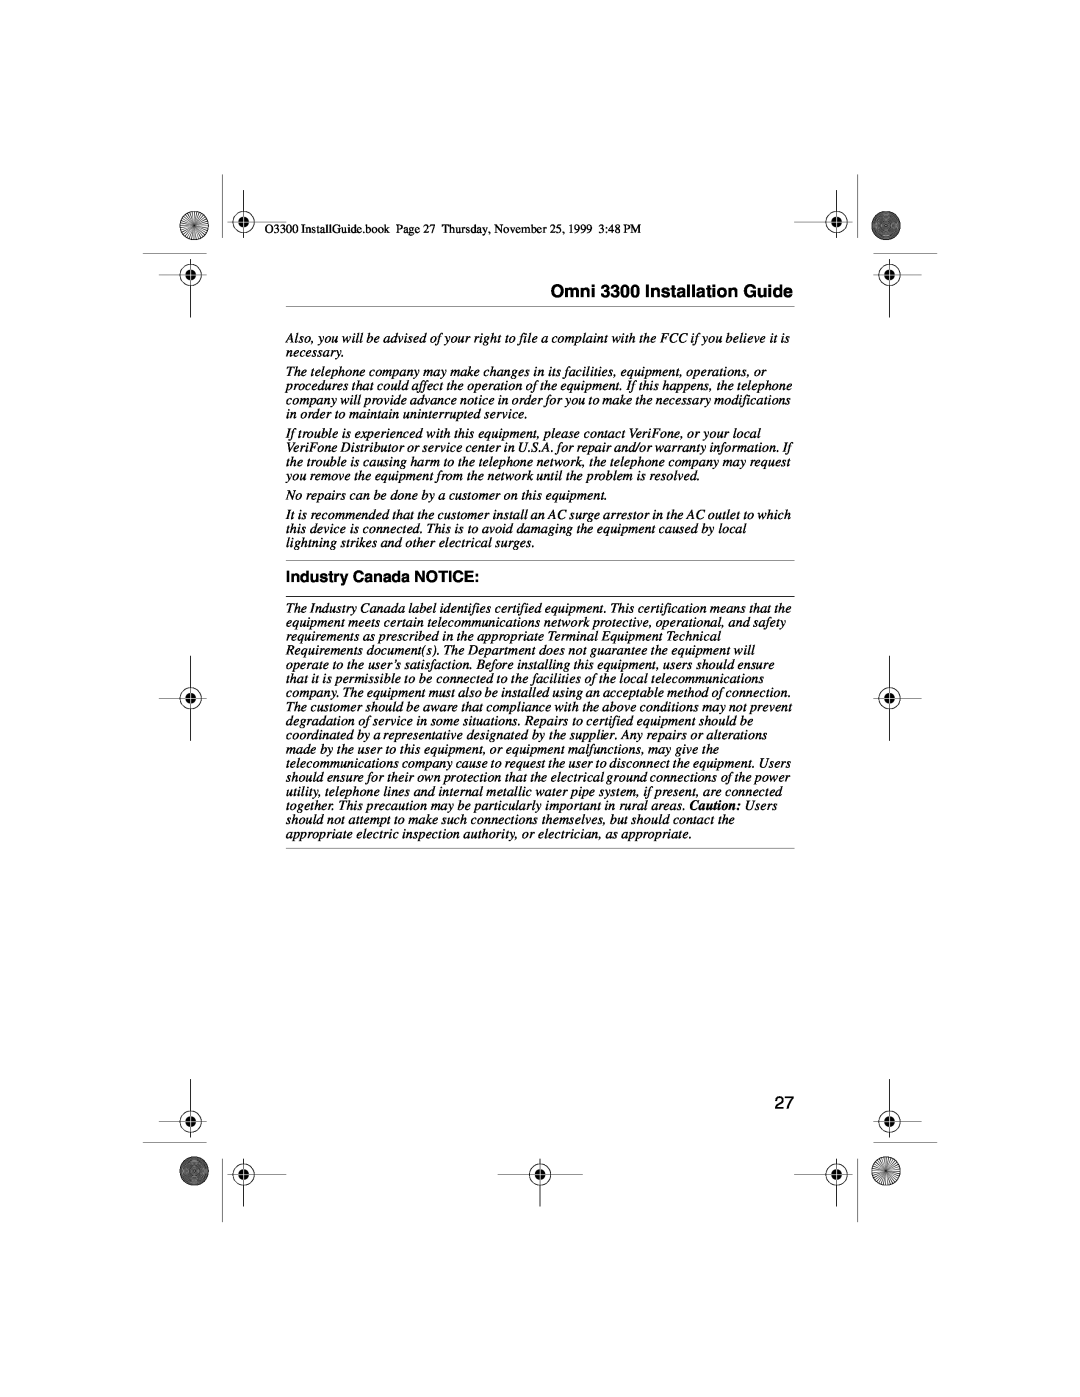 VeriFone manual Omni 3300 Installation Guide, Industry Canada NOTICE 